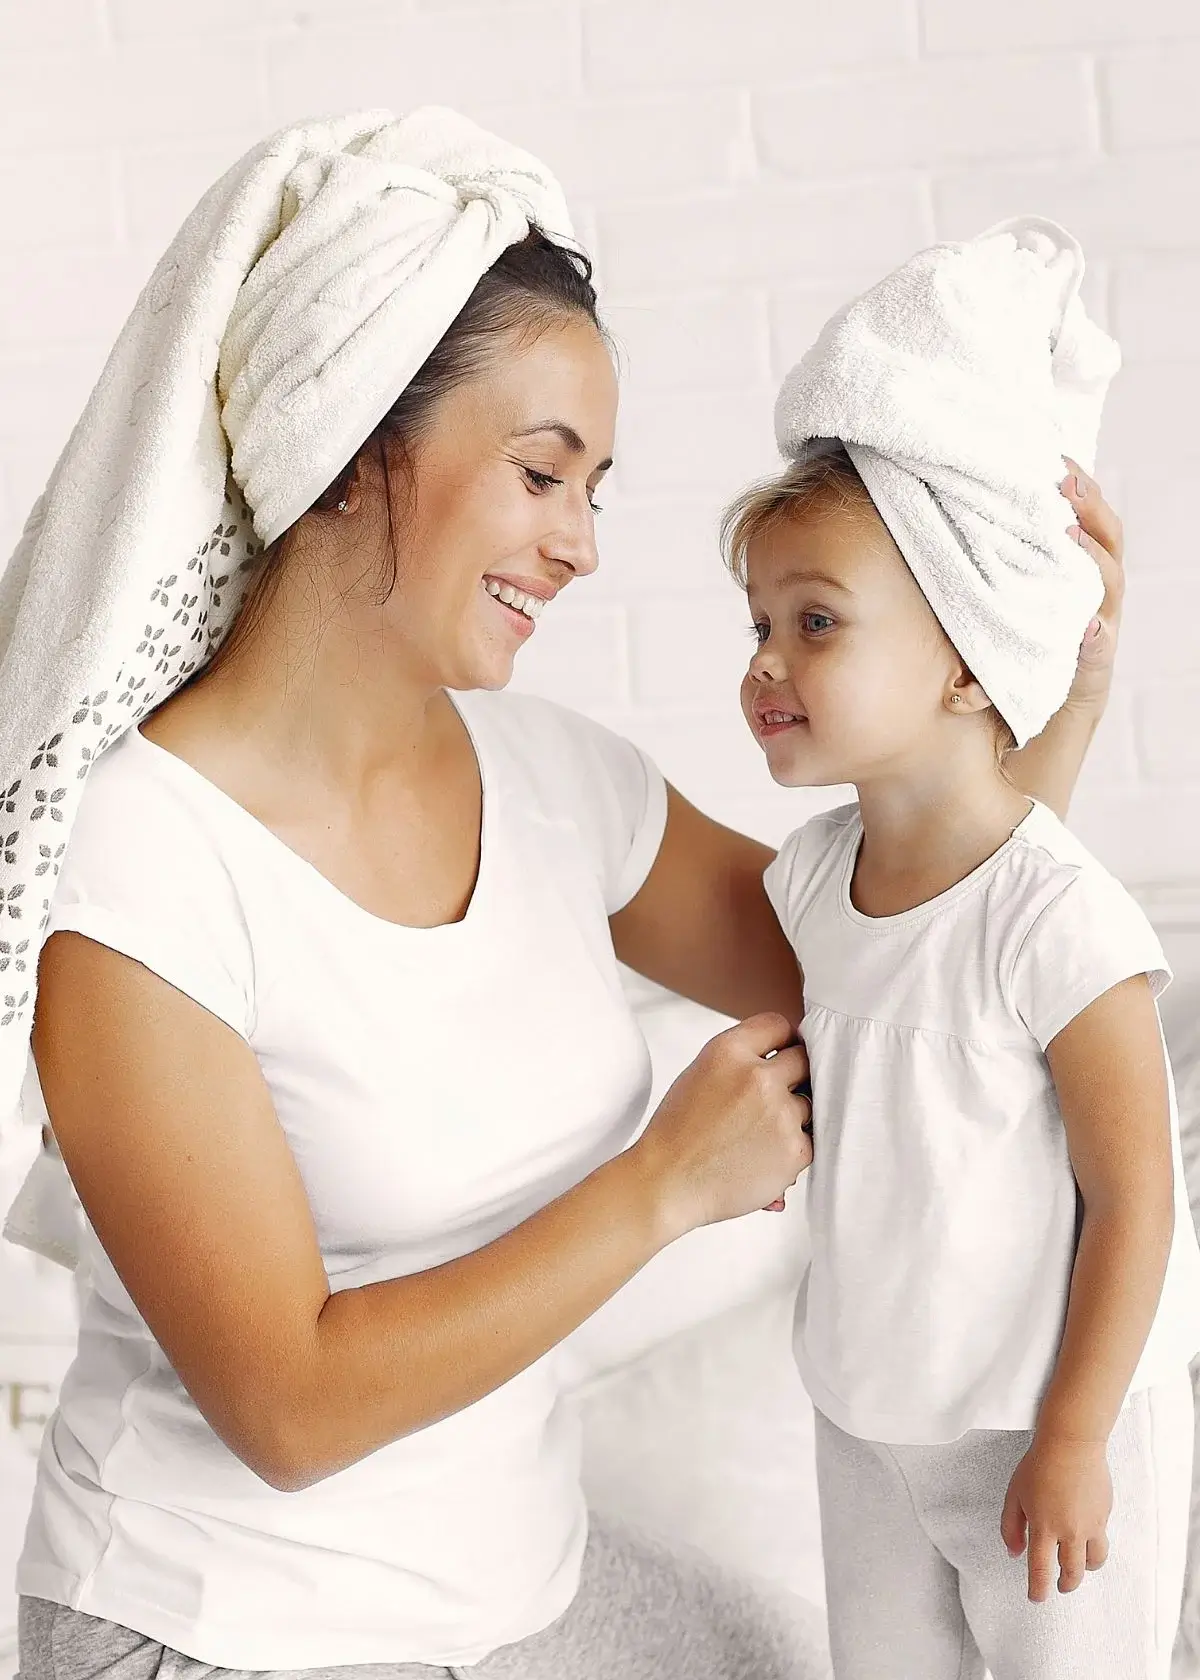 How often should I bathe my toddler using body wash?